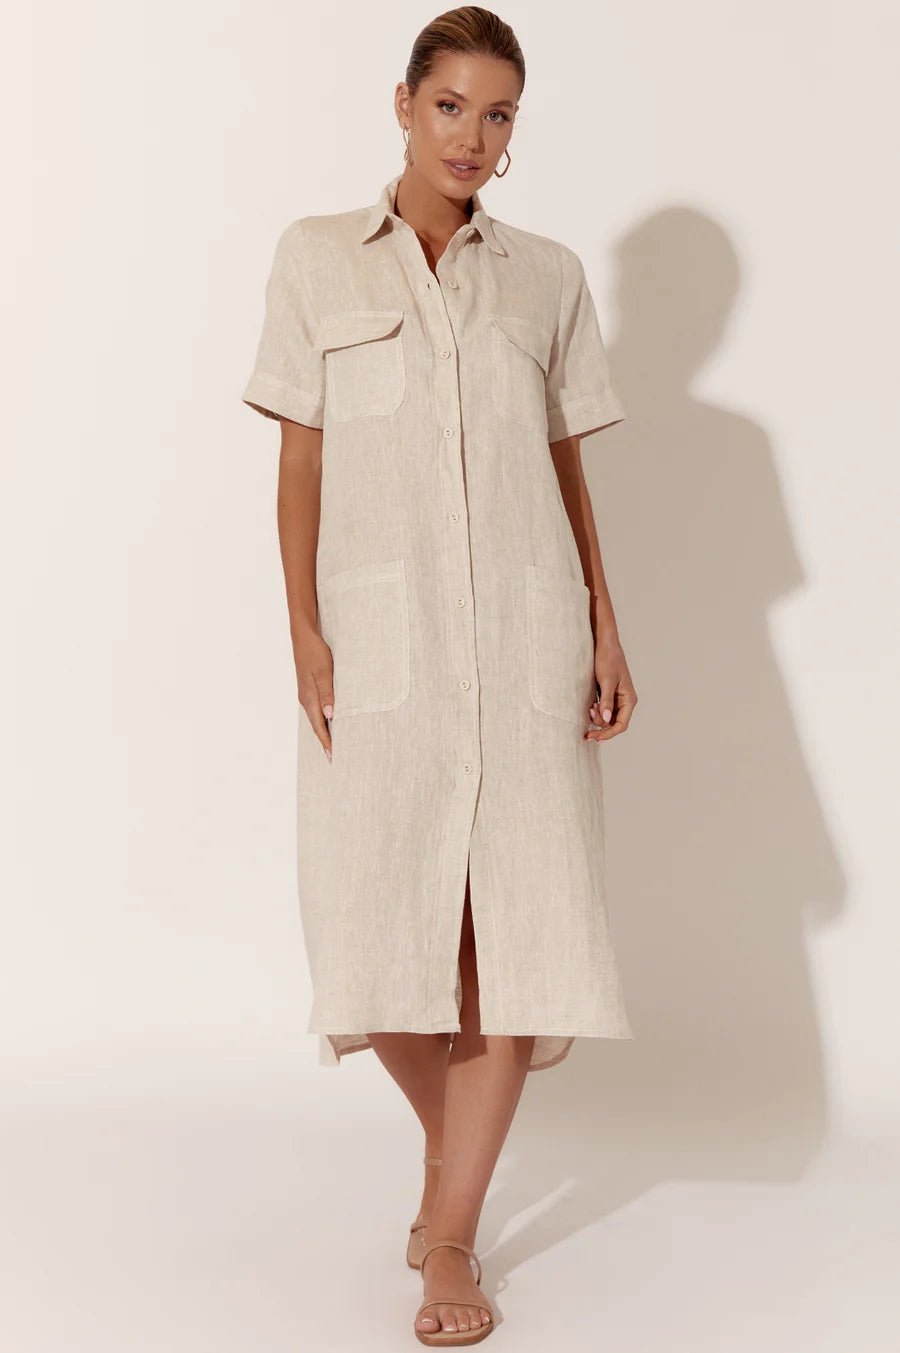 Petrina Short Sleeve Linen Dress (Natural) - Something For Me​​